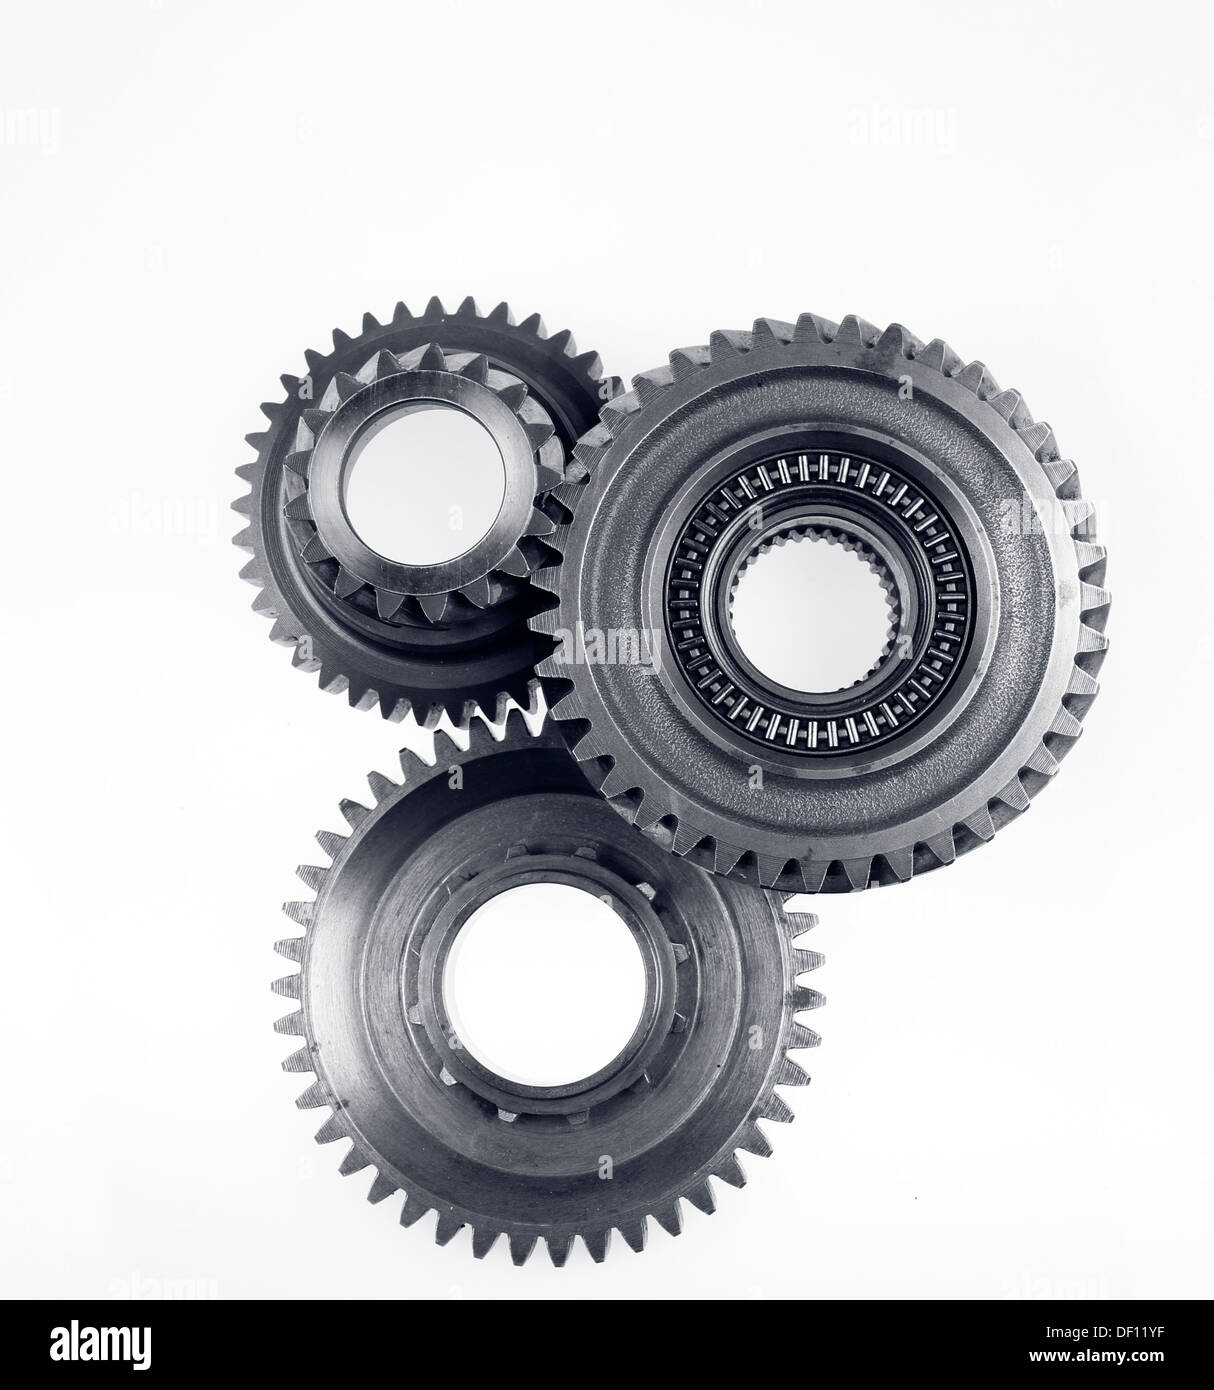 Three metal gears on plain background Stock Photo